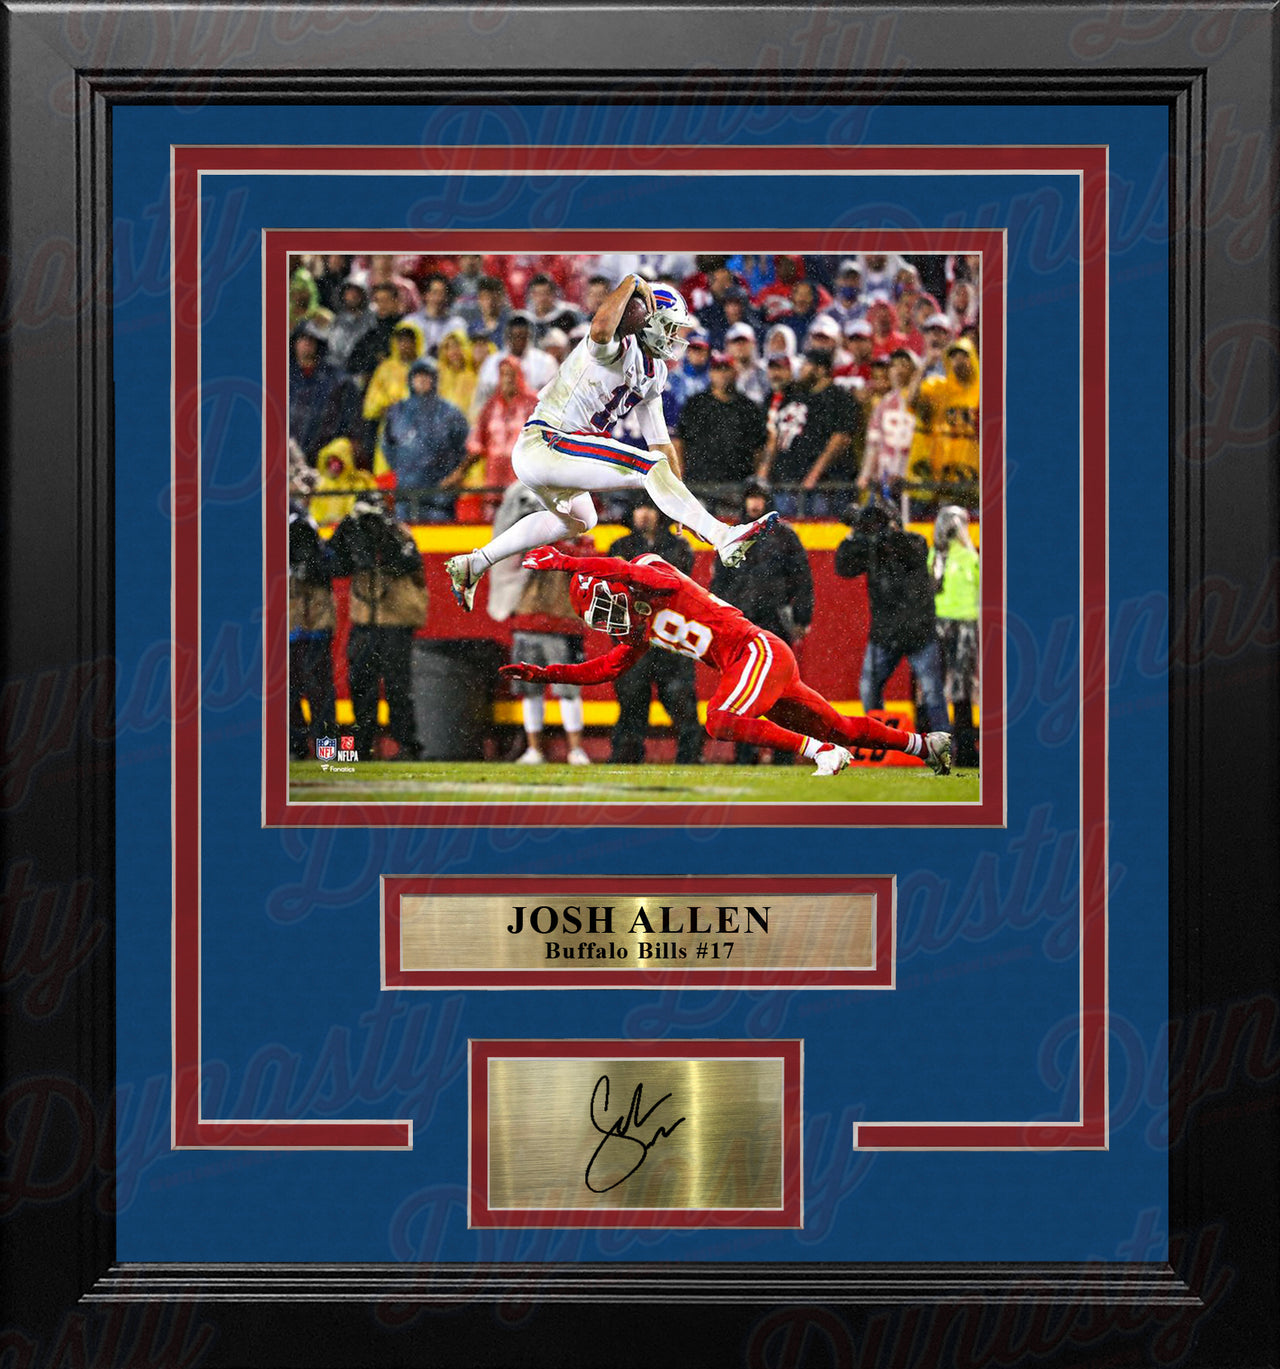 Josh Allen Defender Hurdle Buffalo Bills 8" x 10" Framed Football Photo with Engraved Autograph - Dynasty Sports & Framing 